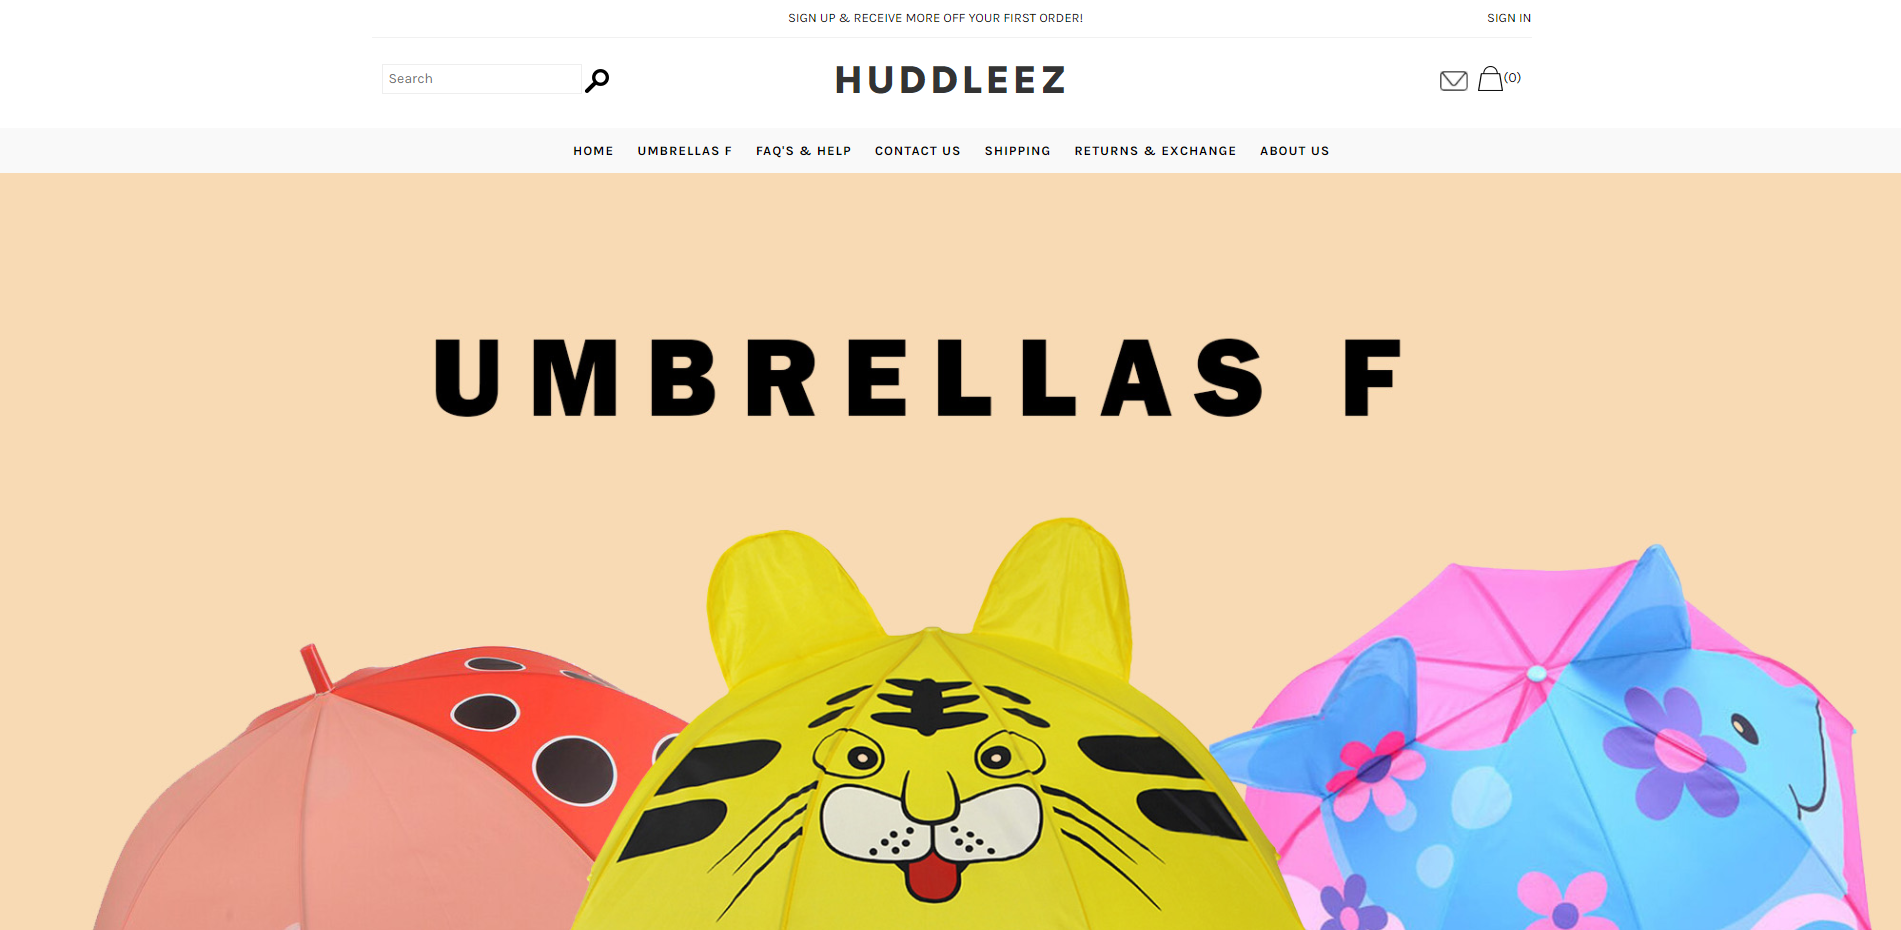 huddleez scam home page